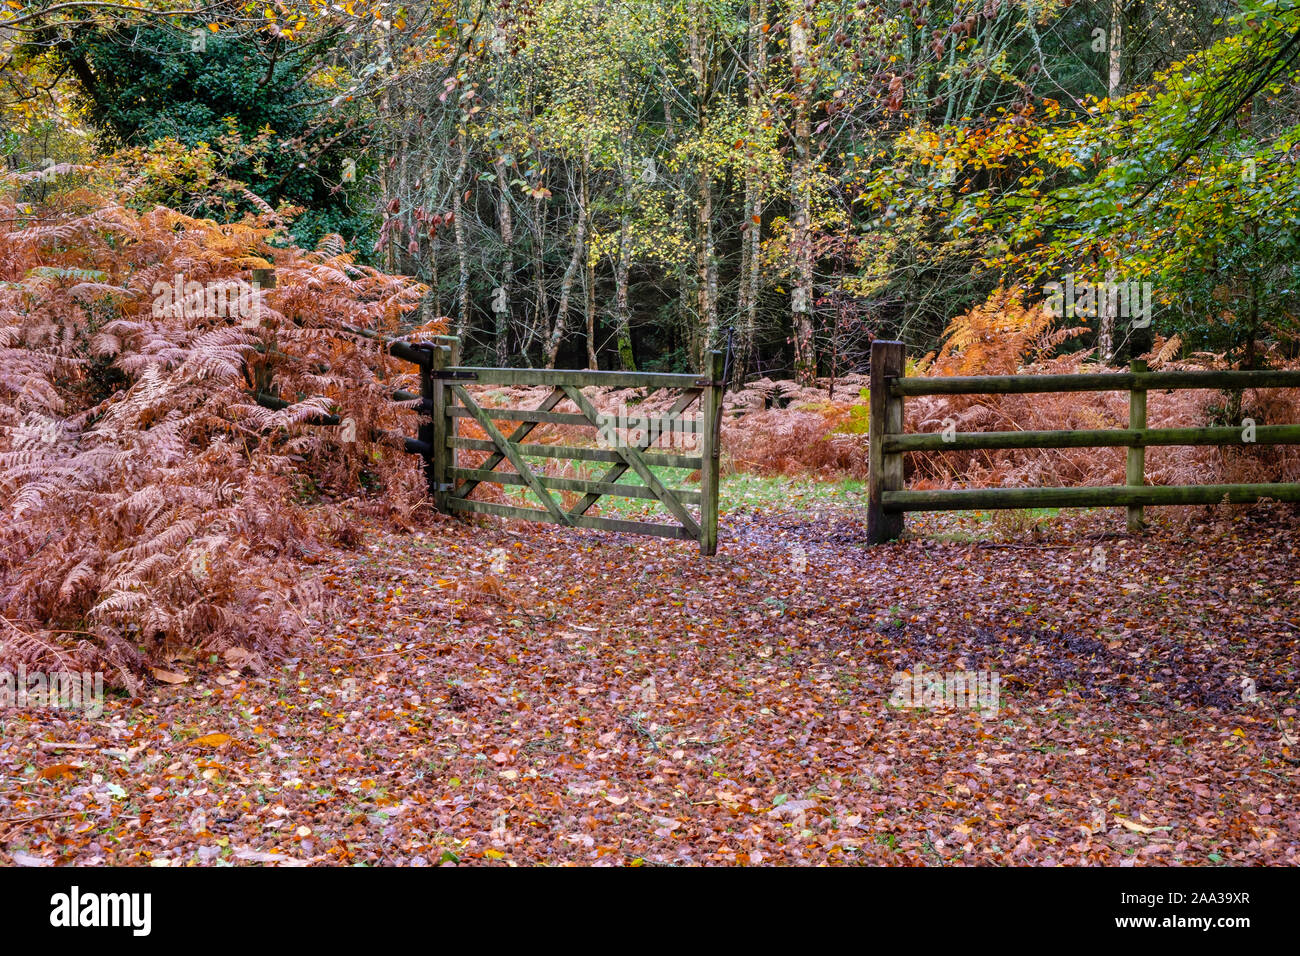 New Forest, herbstliche Farben, 5-bar Gate, Hampshire, England, UK. Stockfoto